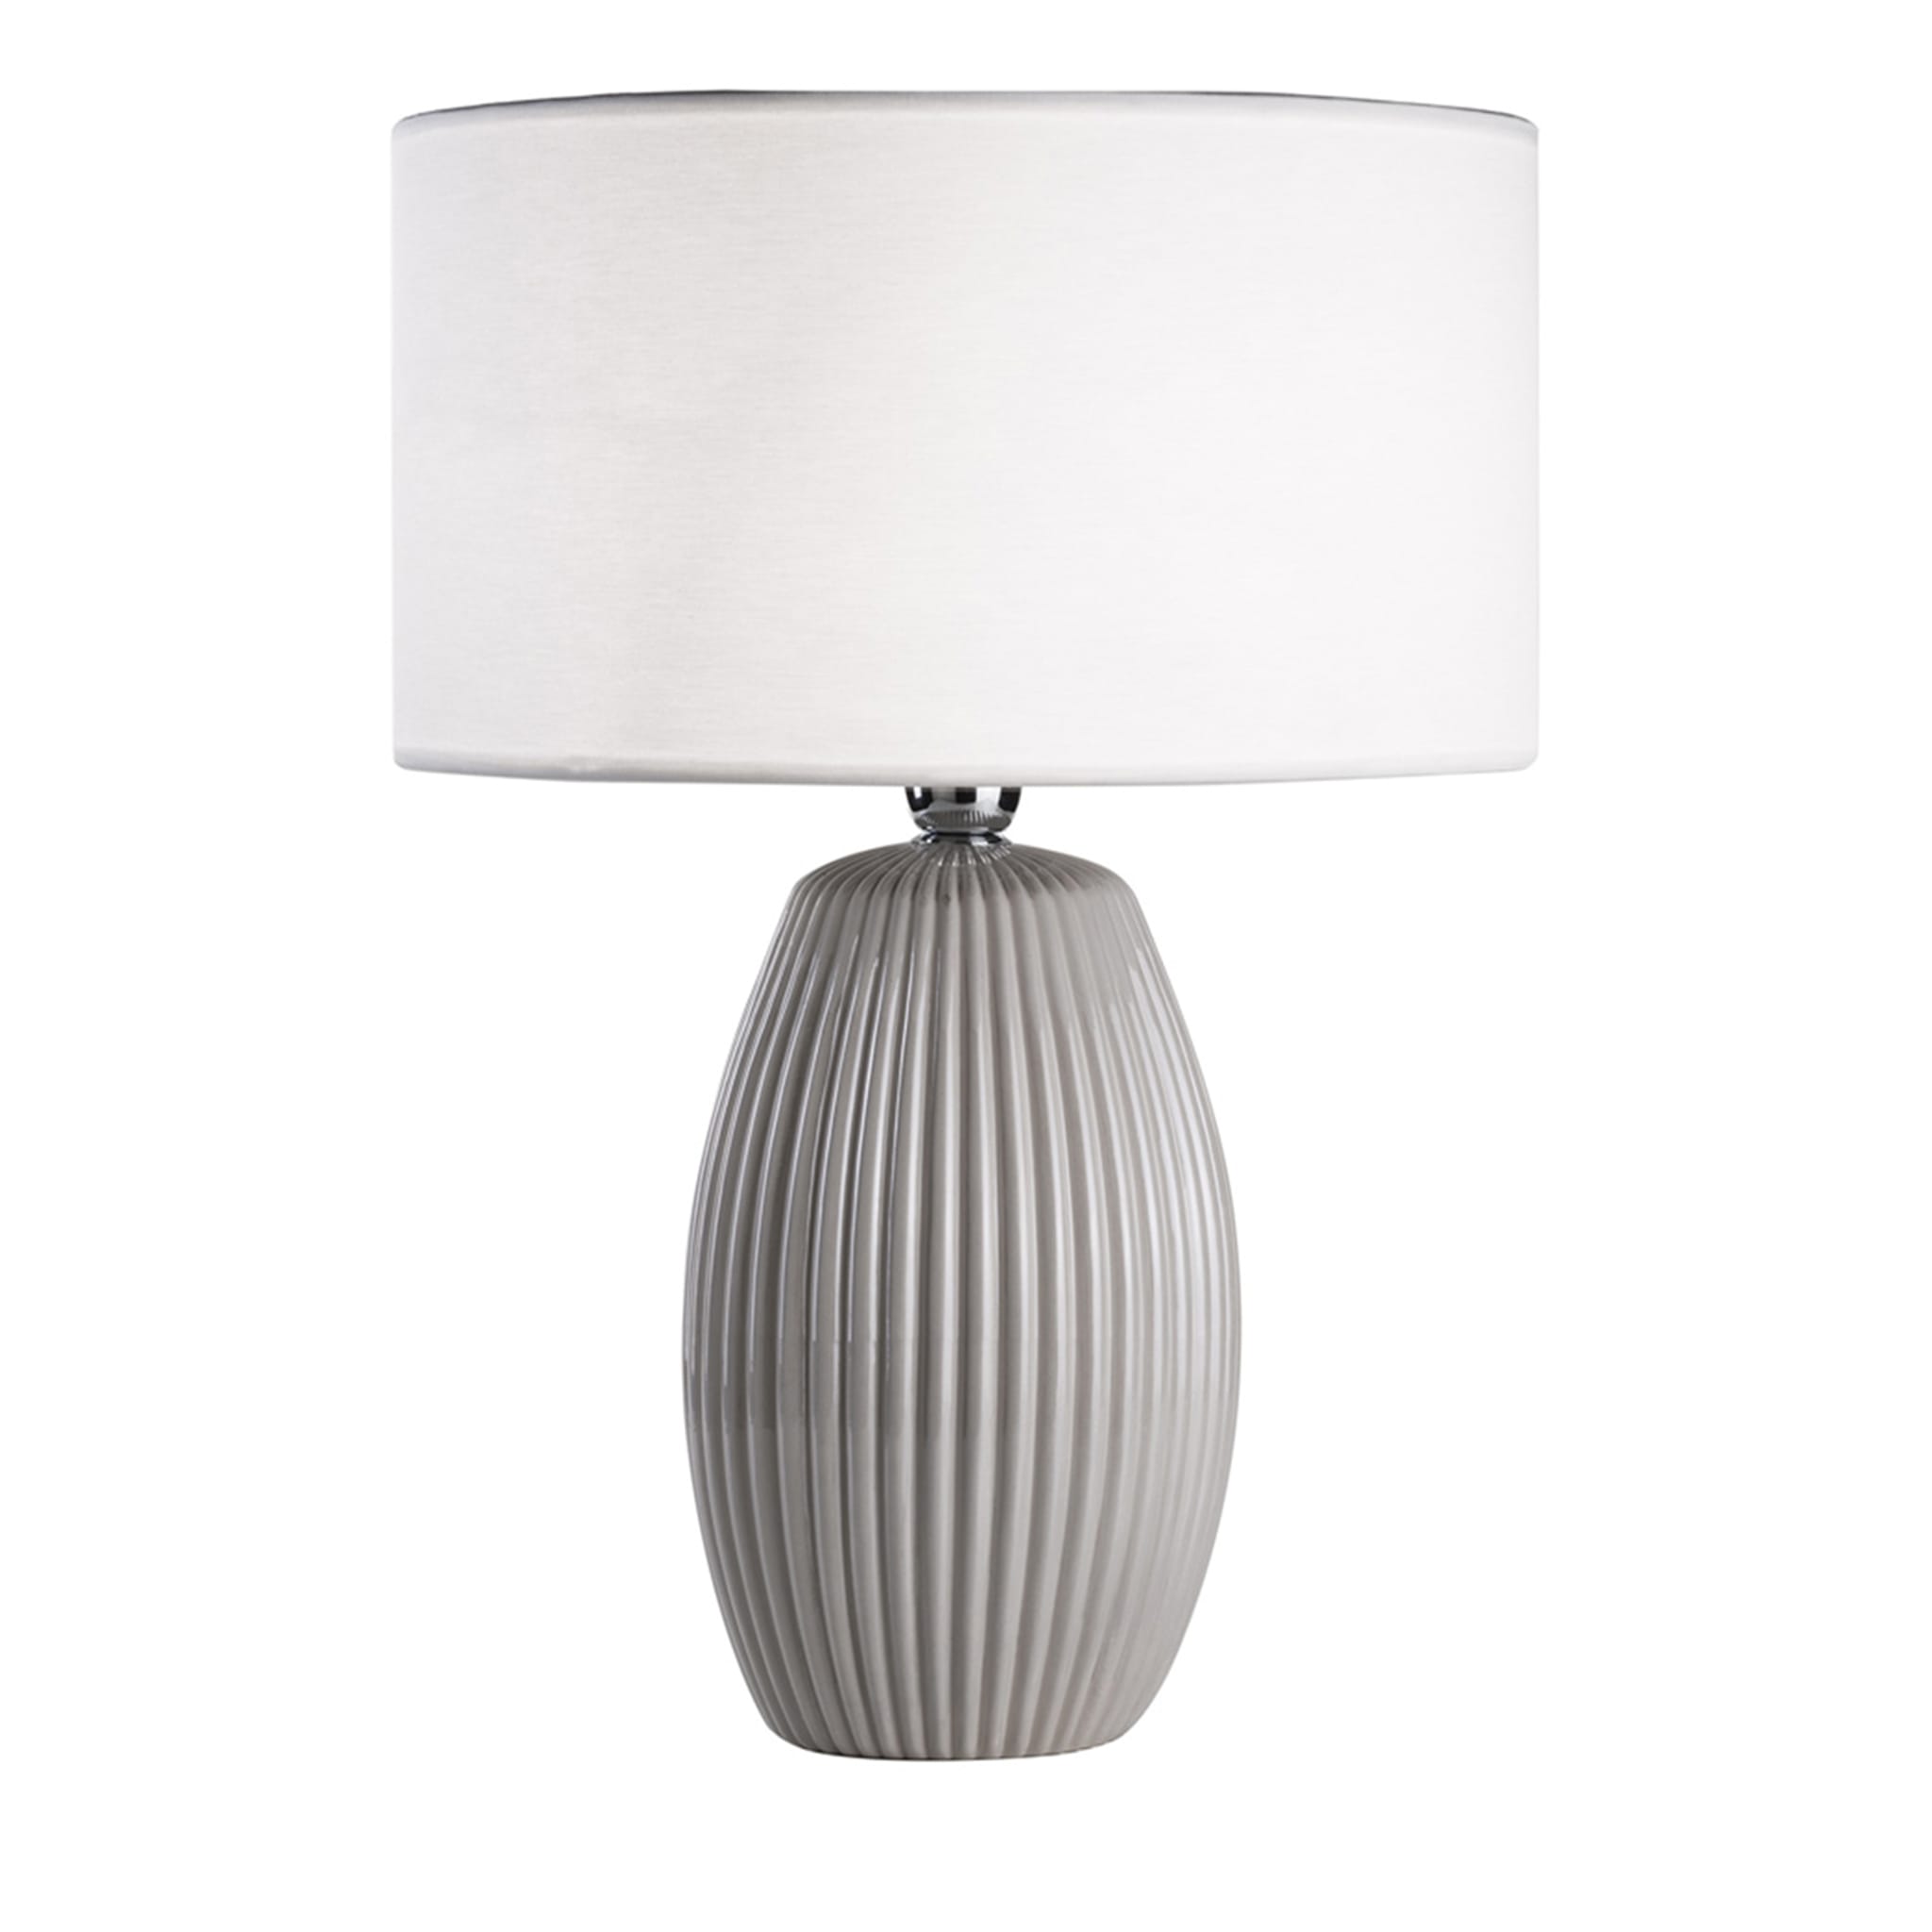 Reve Small Light-Gray Table Lamp - Main view